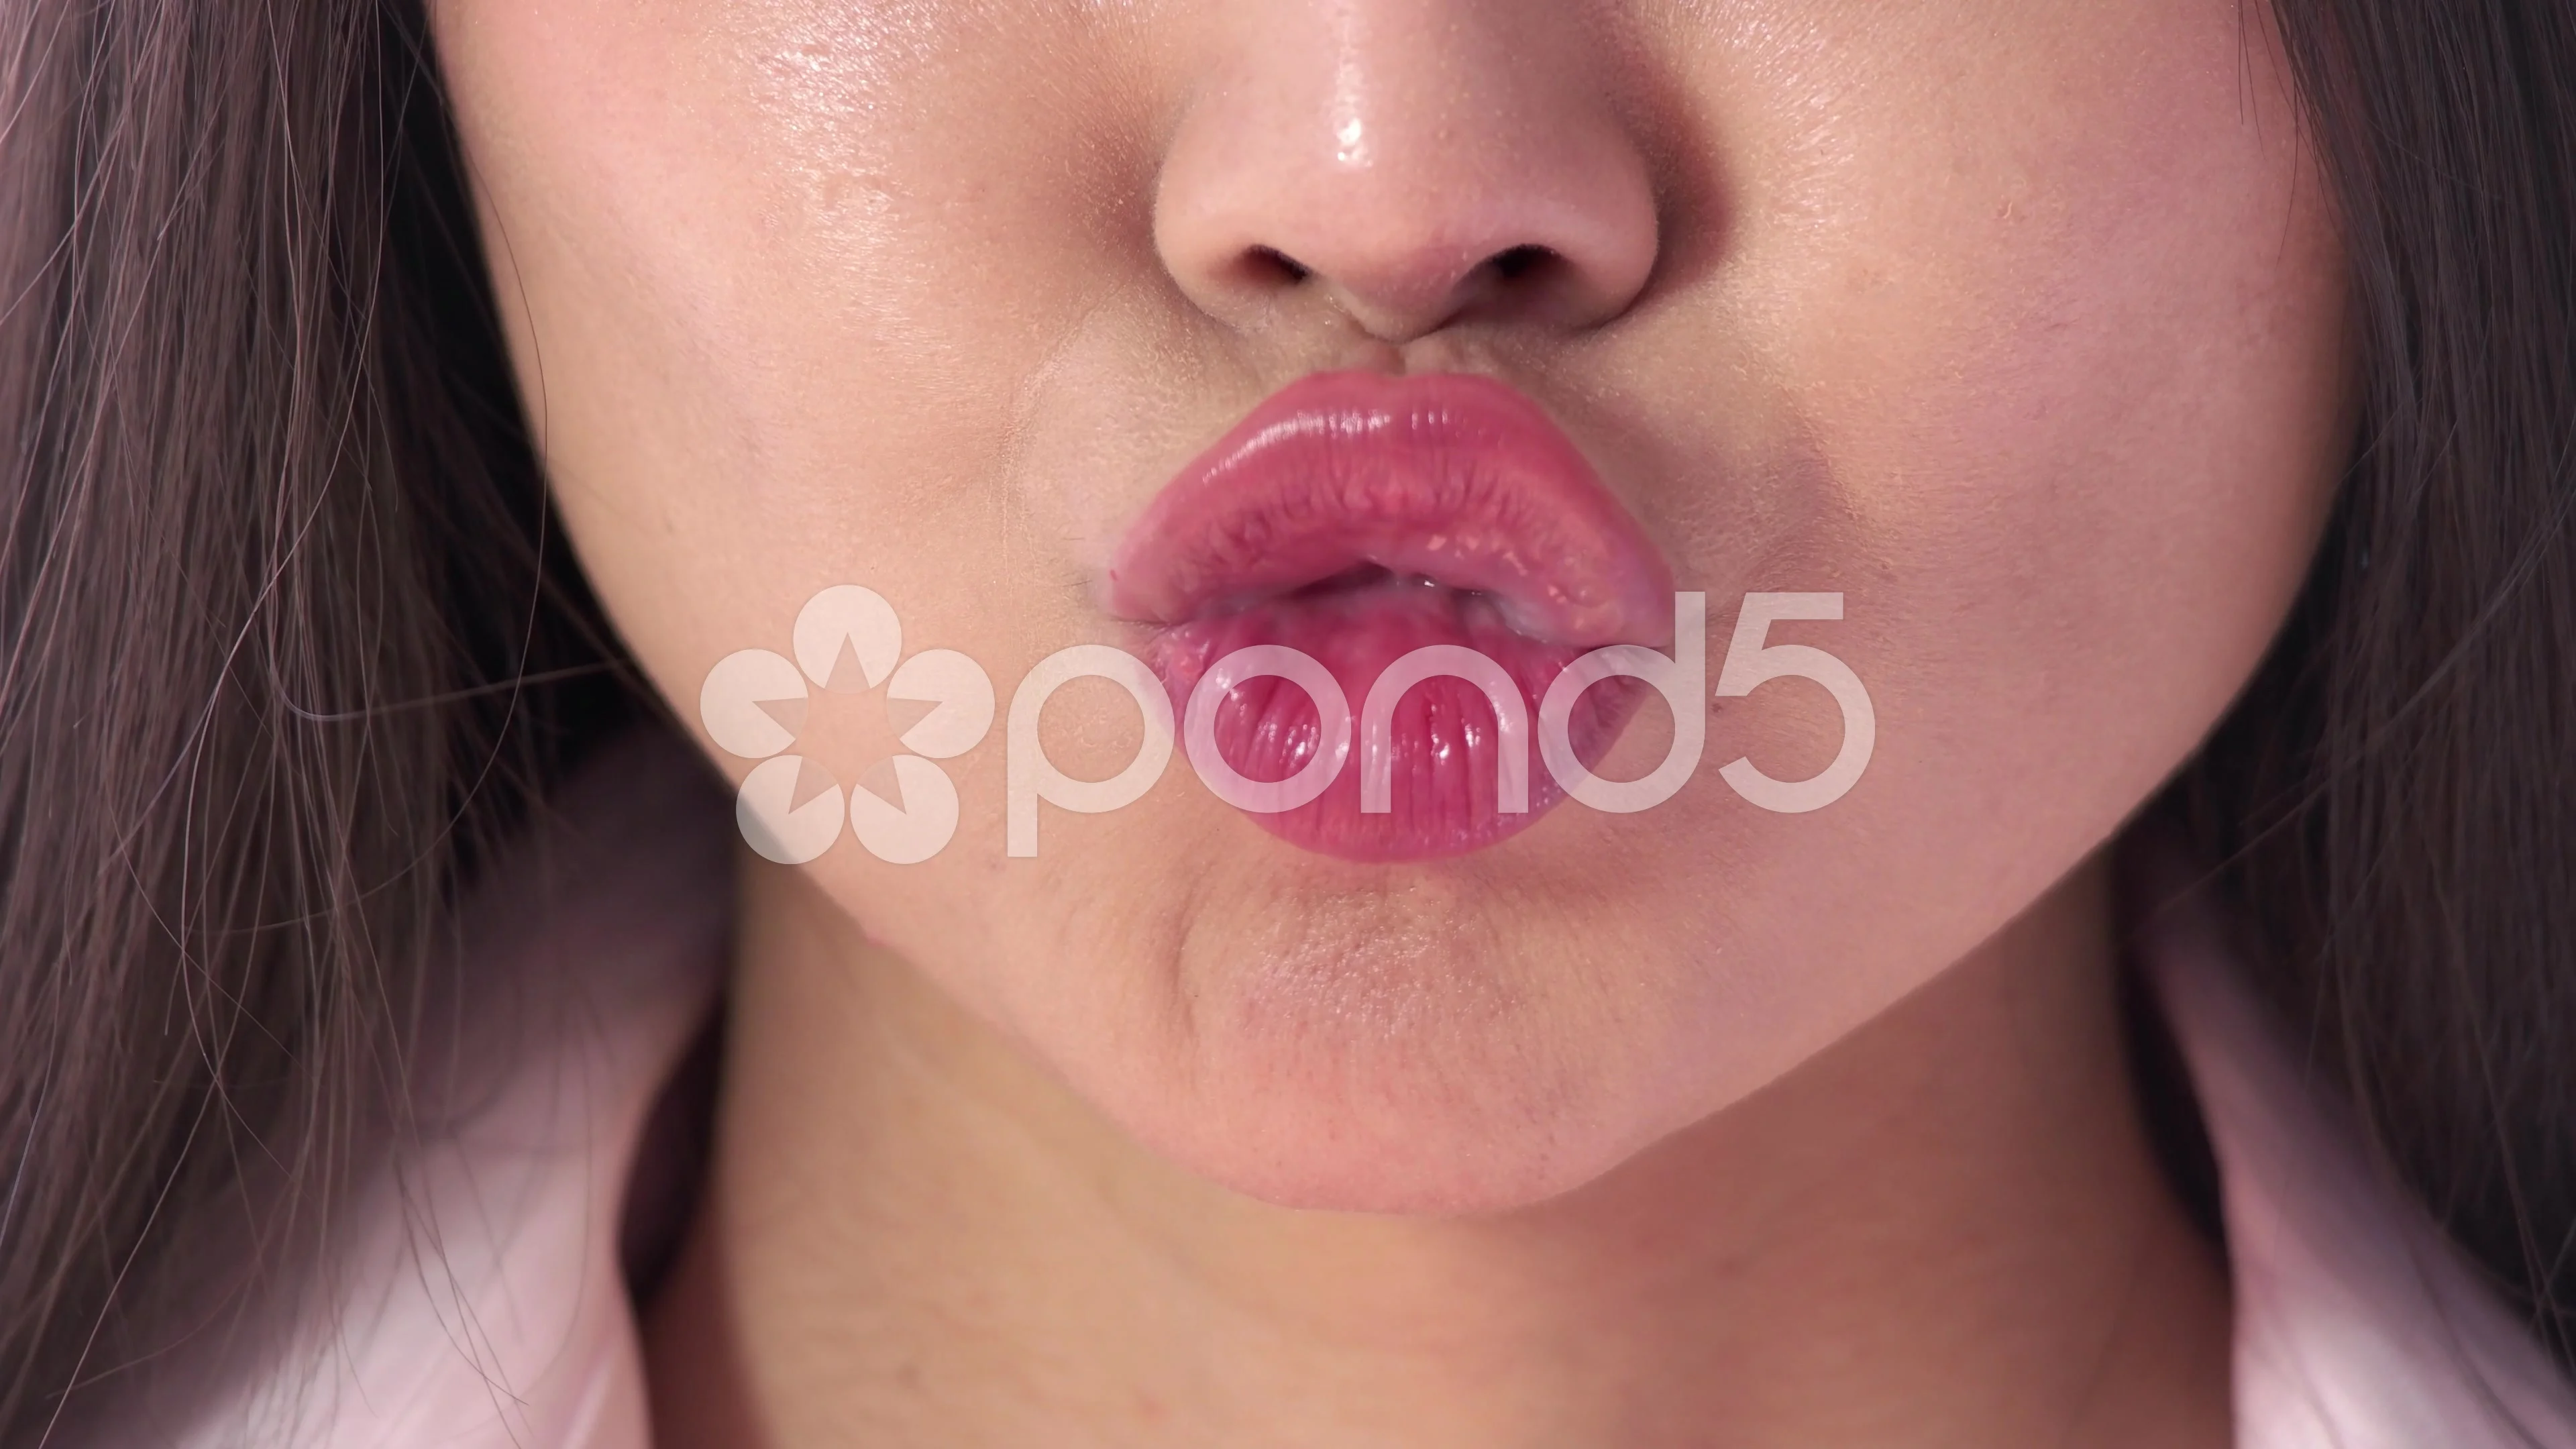 barney simon add hot asian women kissing photo